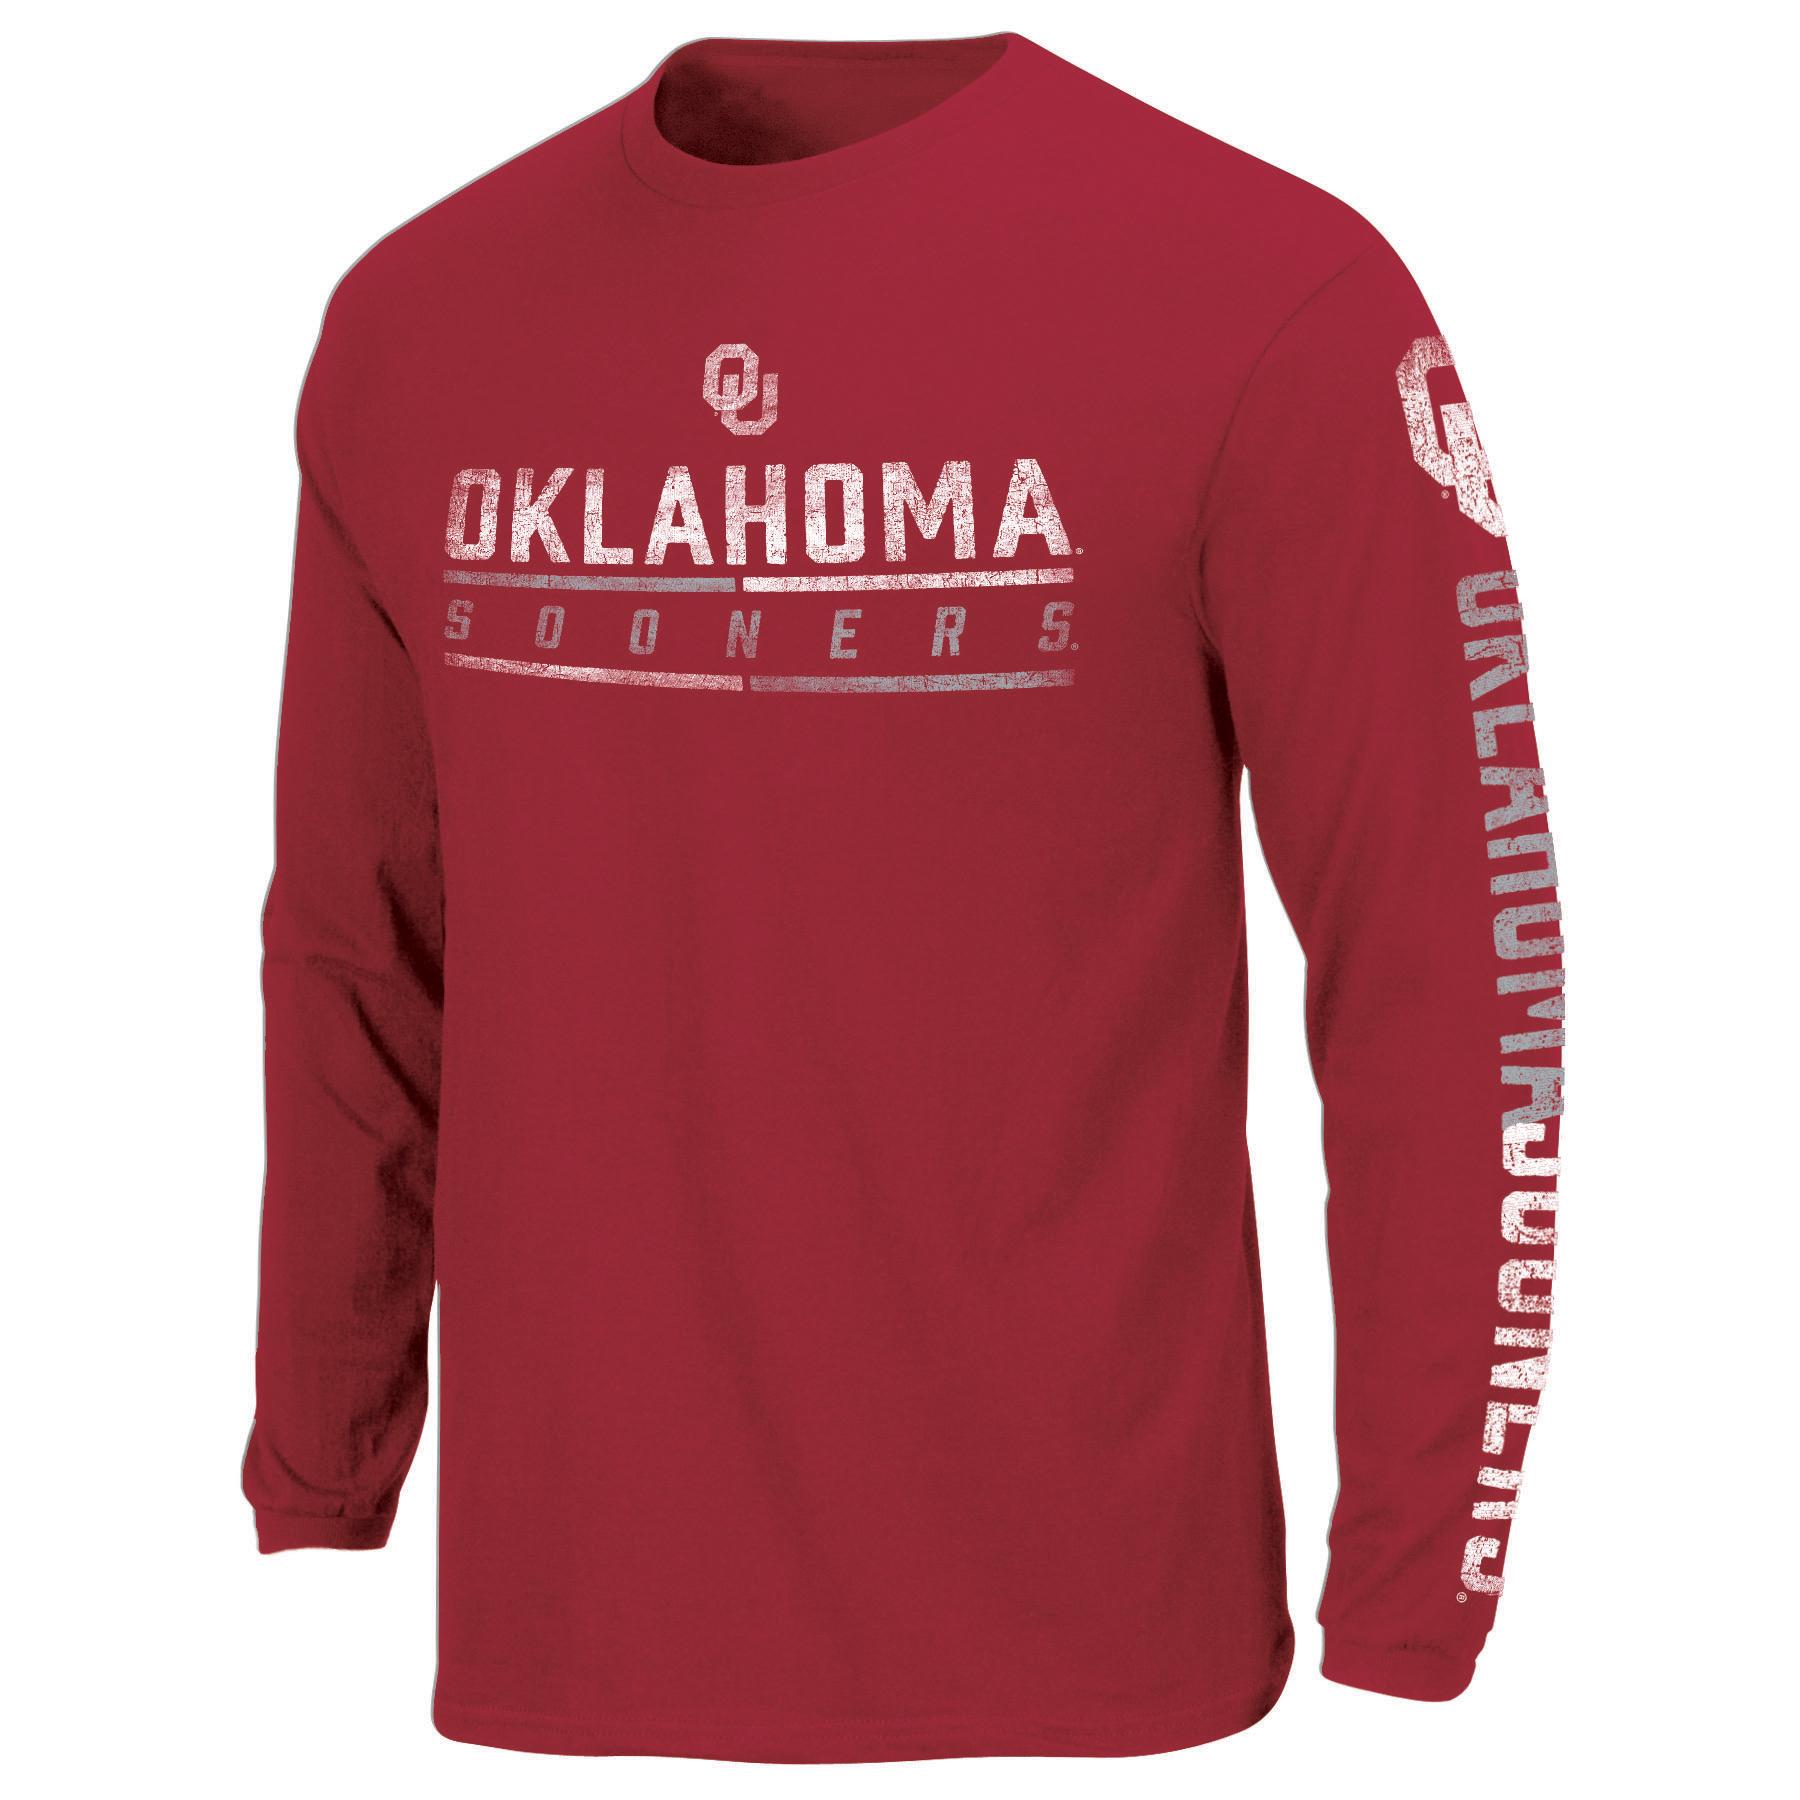 NCAA Men's Long-Sleeve T-Shirt - Oklahoma Sooners